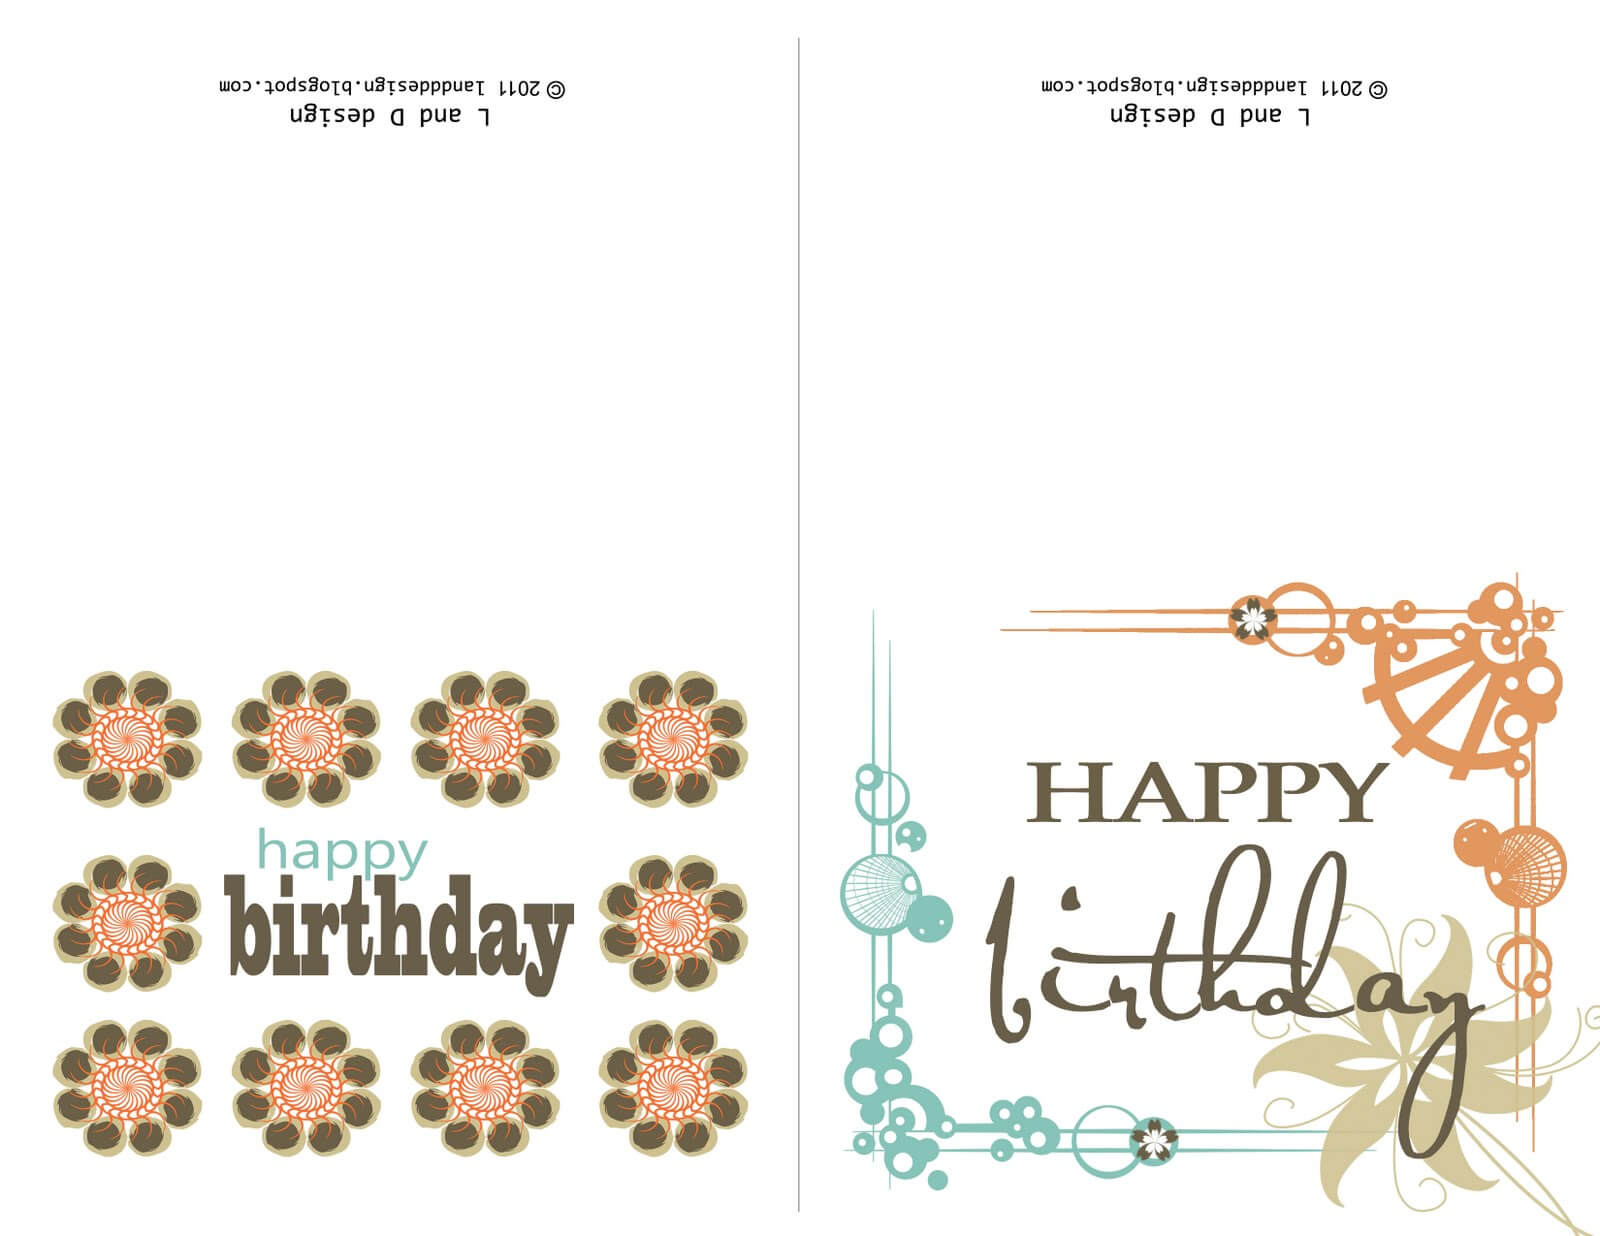 009 Printable Birthday Card Template Cards Free Intended For Intended For Template For Cards To Print Free